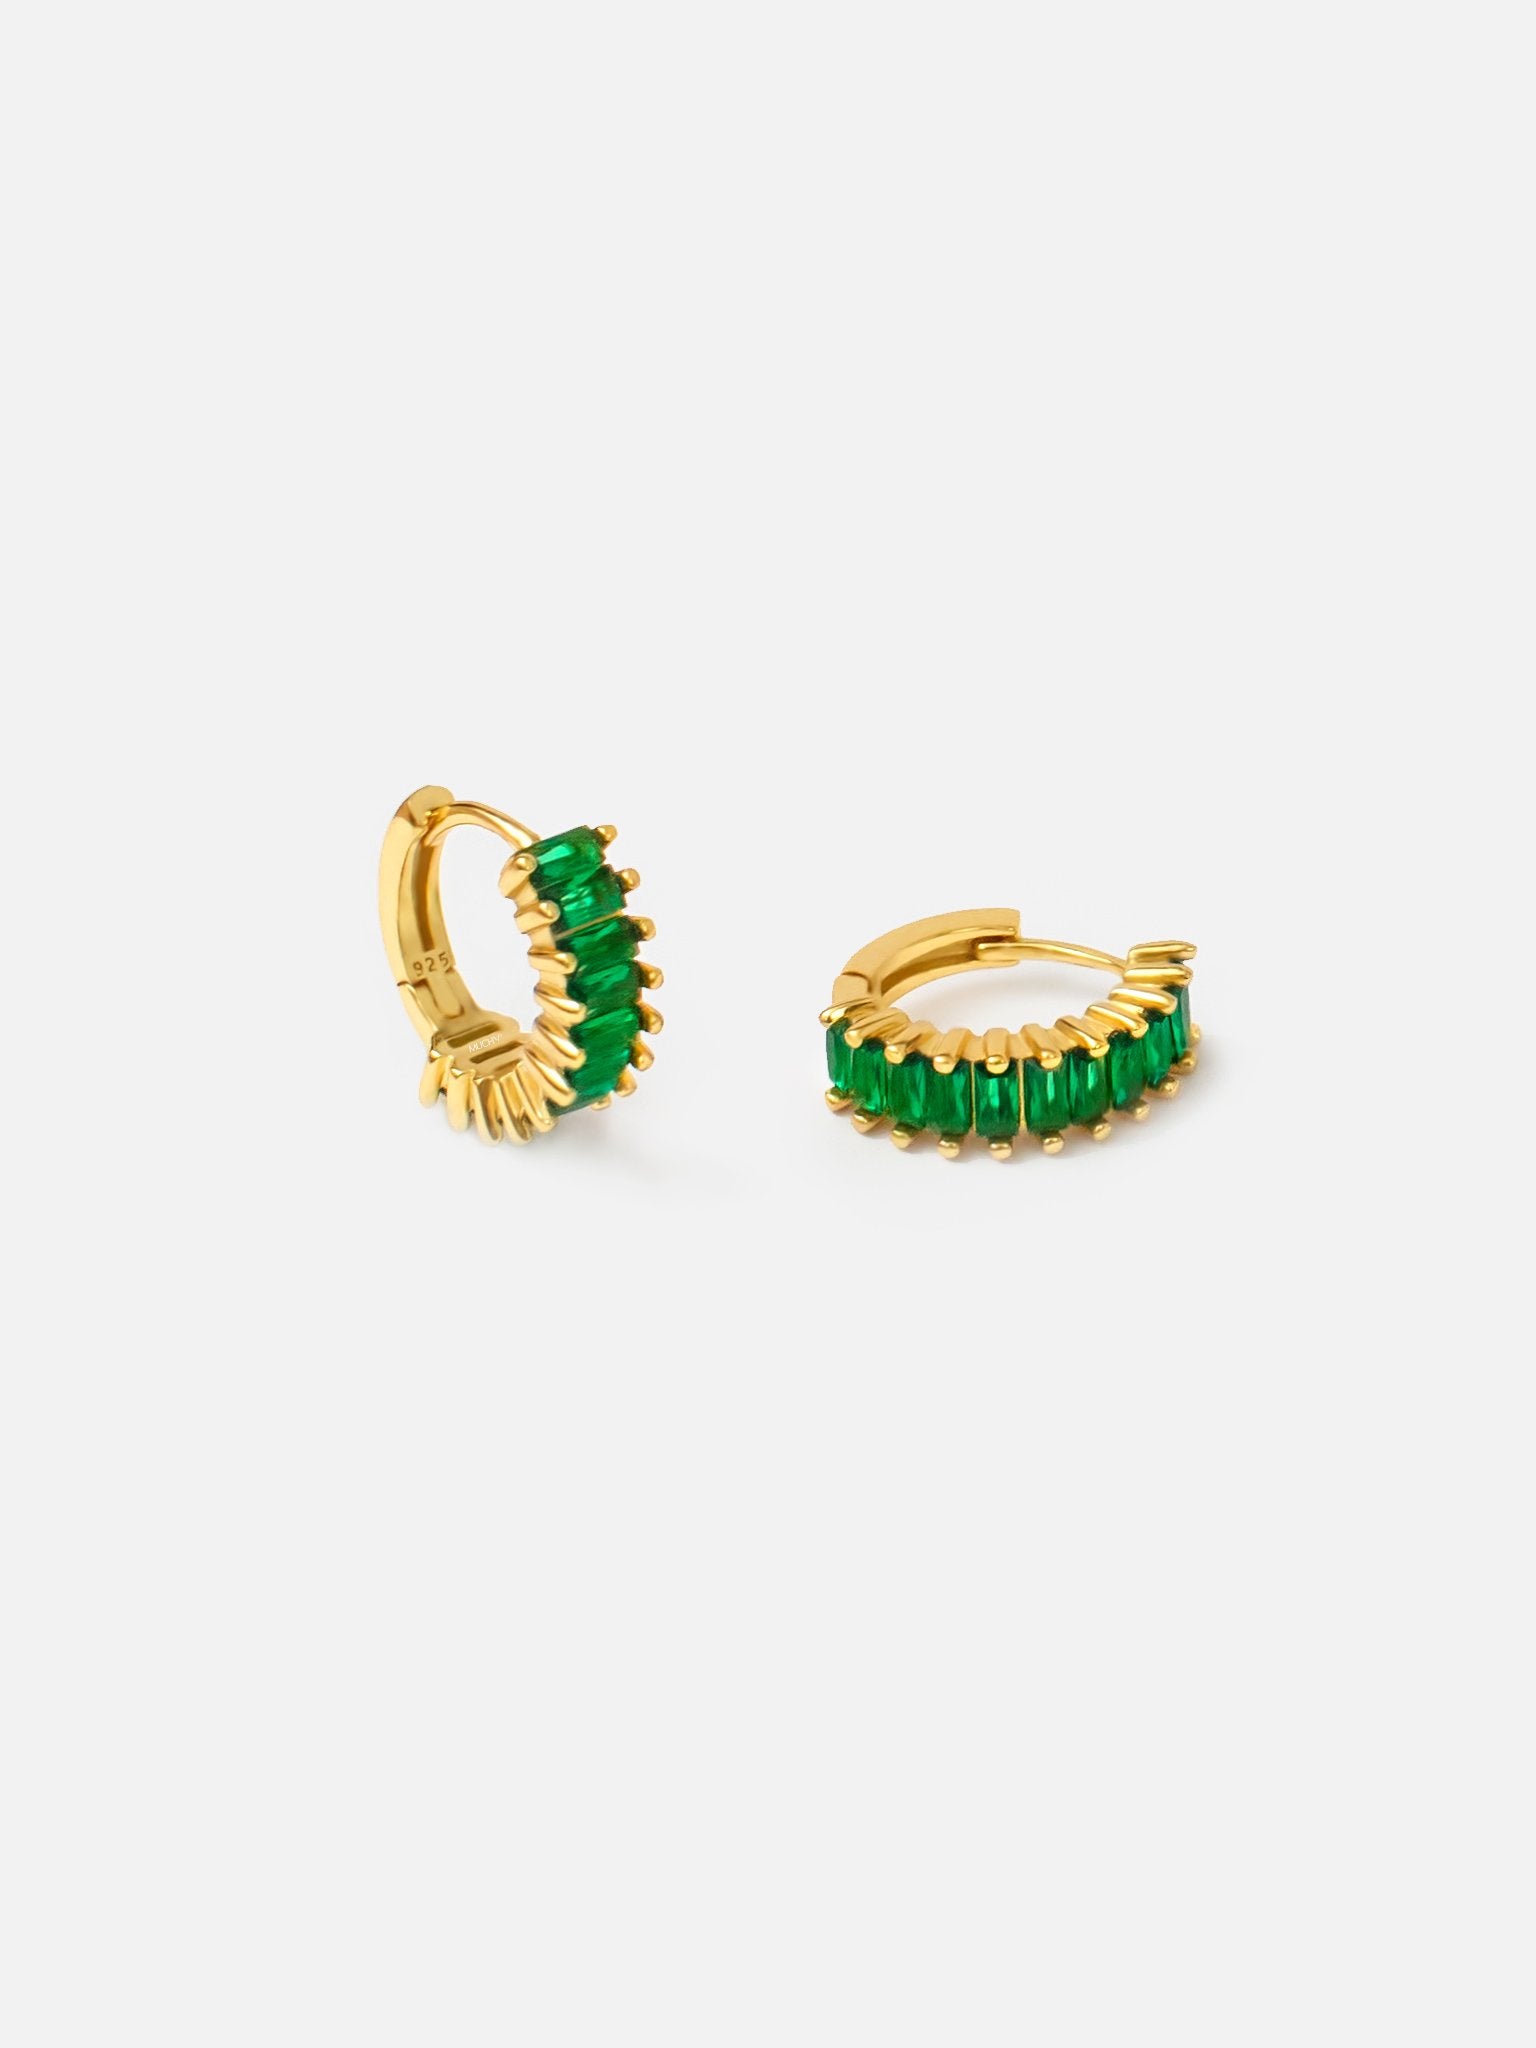 A side view of Small Emerald Green Huggie Hoop Earrings